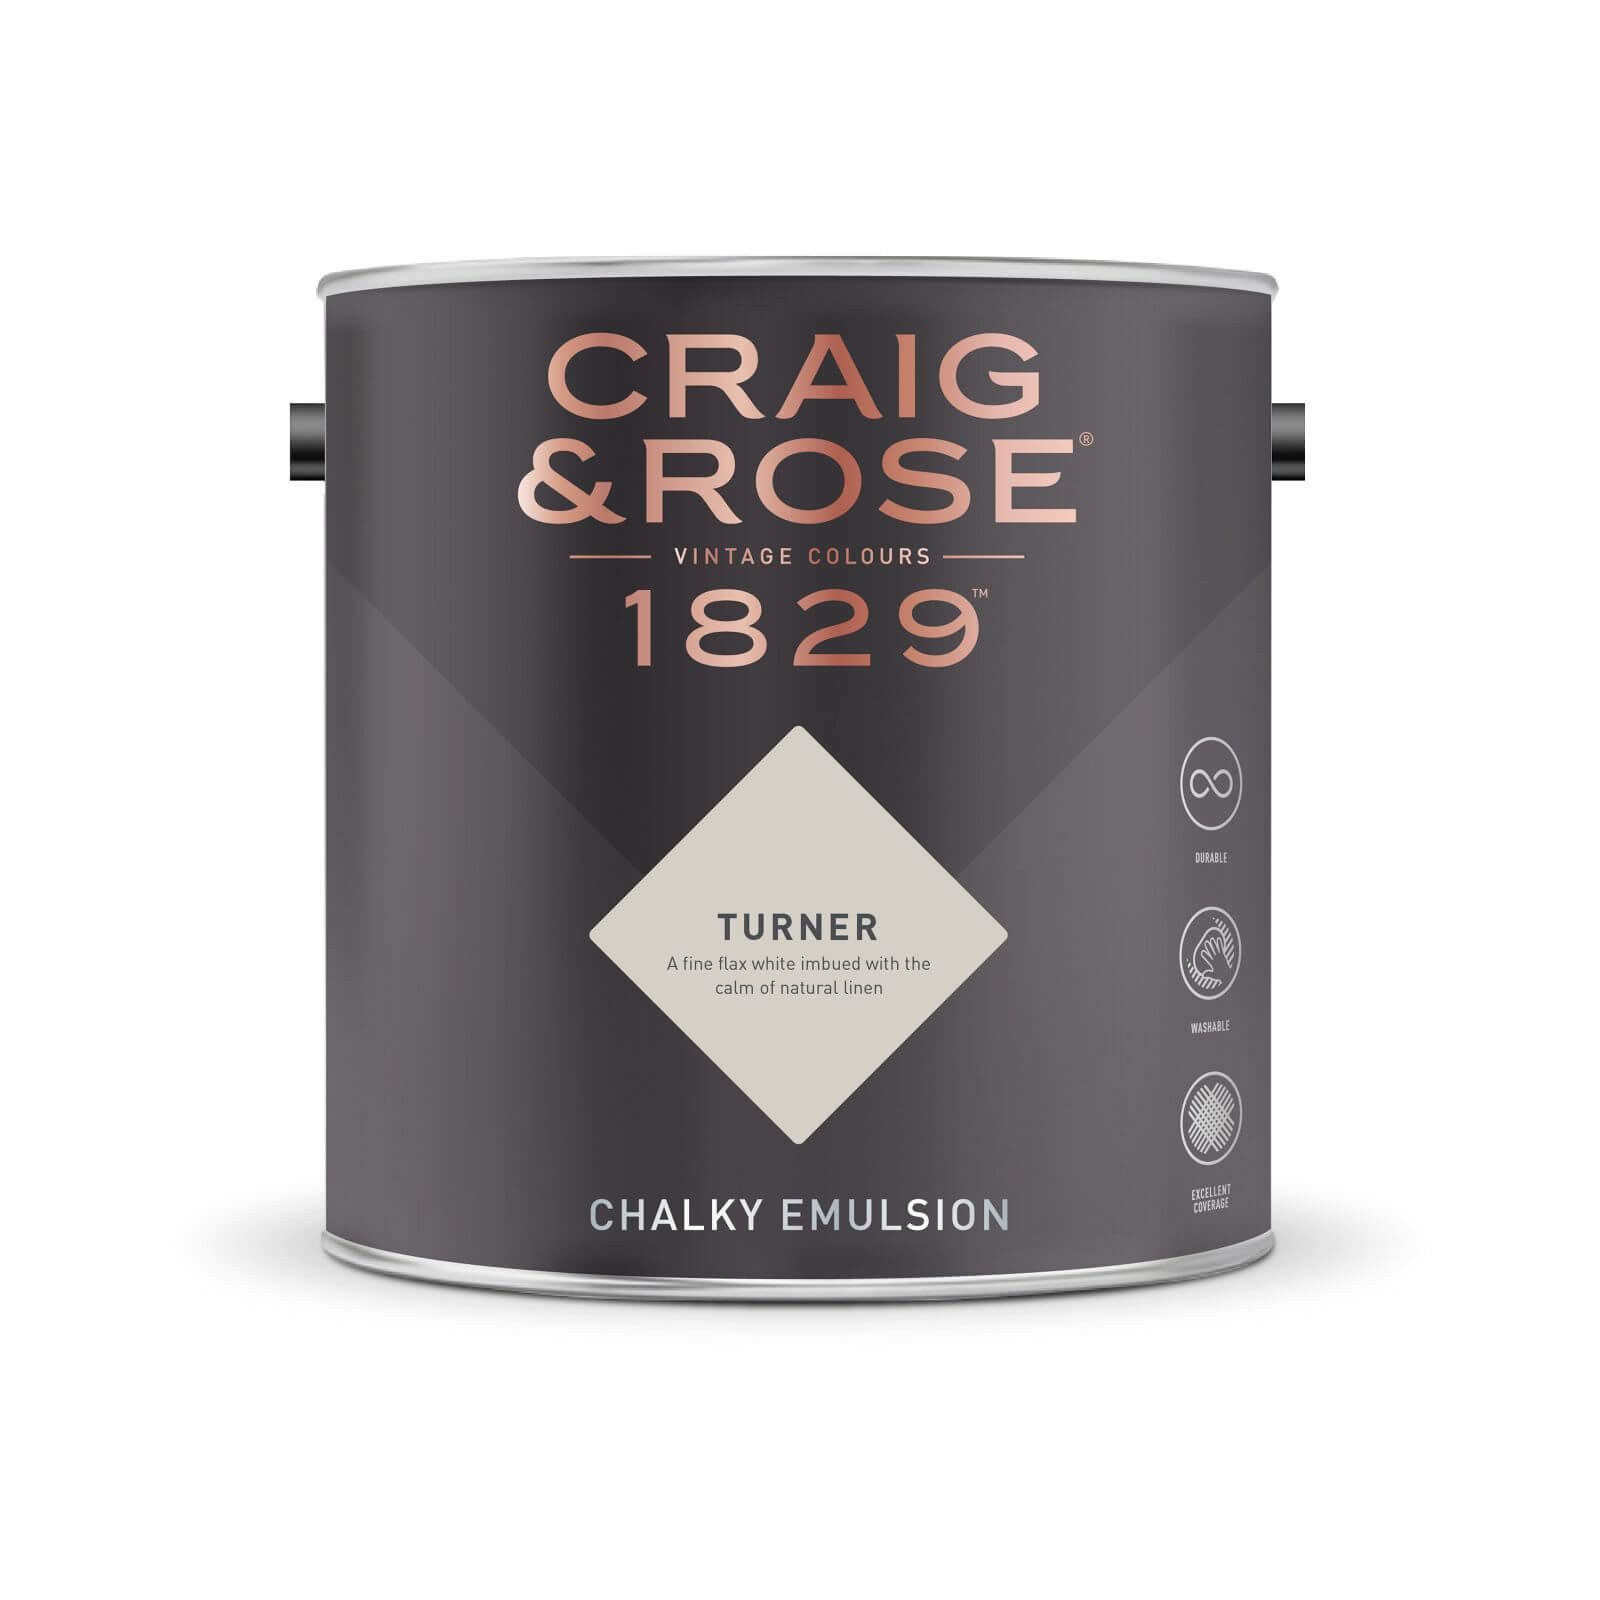 Craig & Rose 1829 Chalky Emulsion Paint Turner - 5L